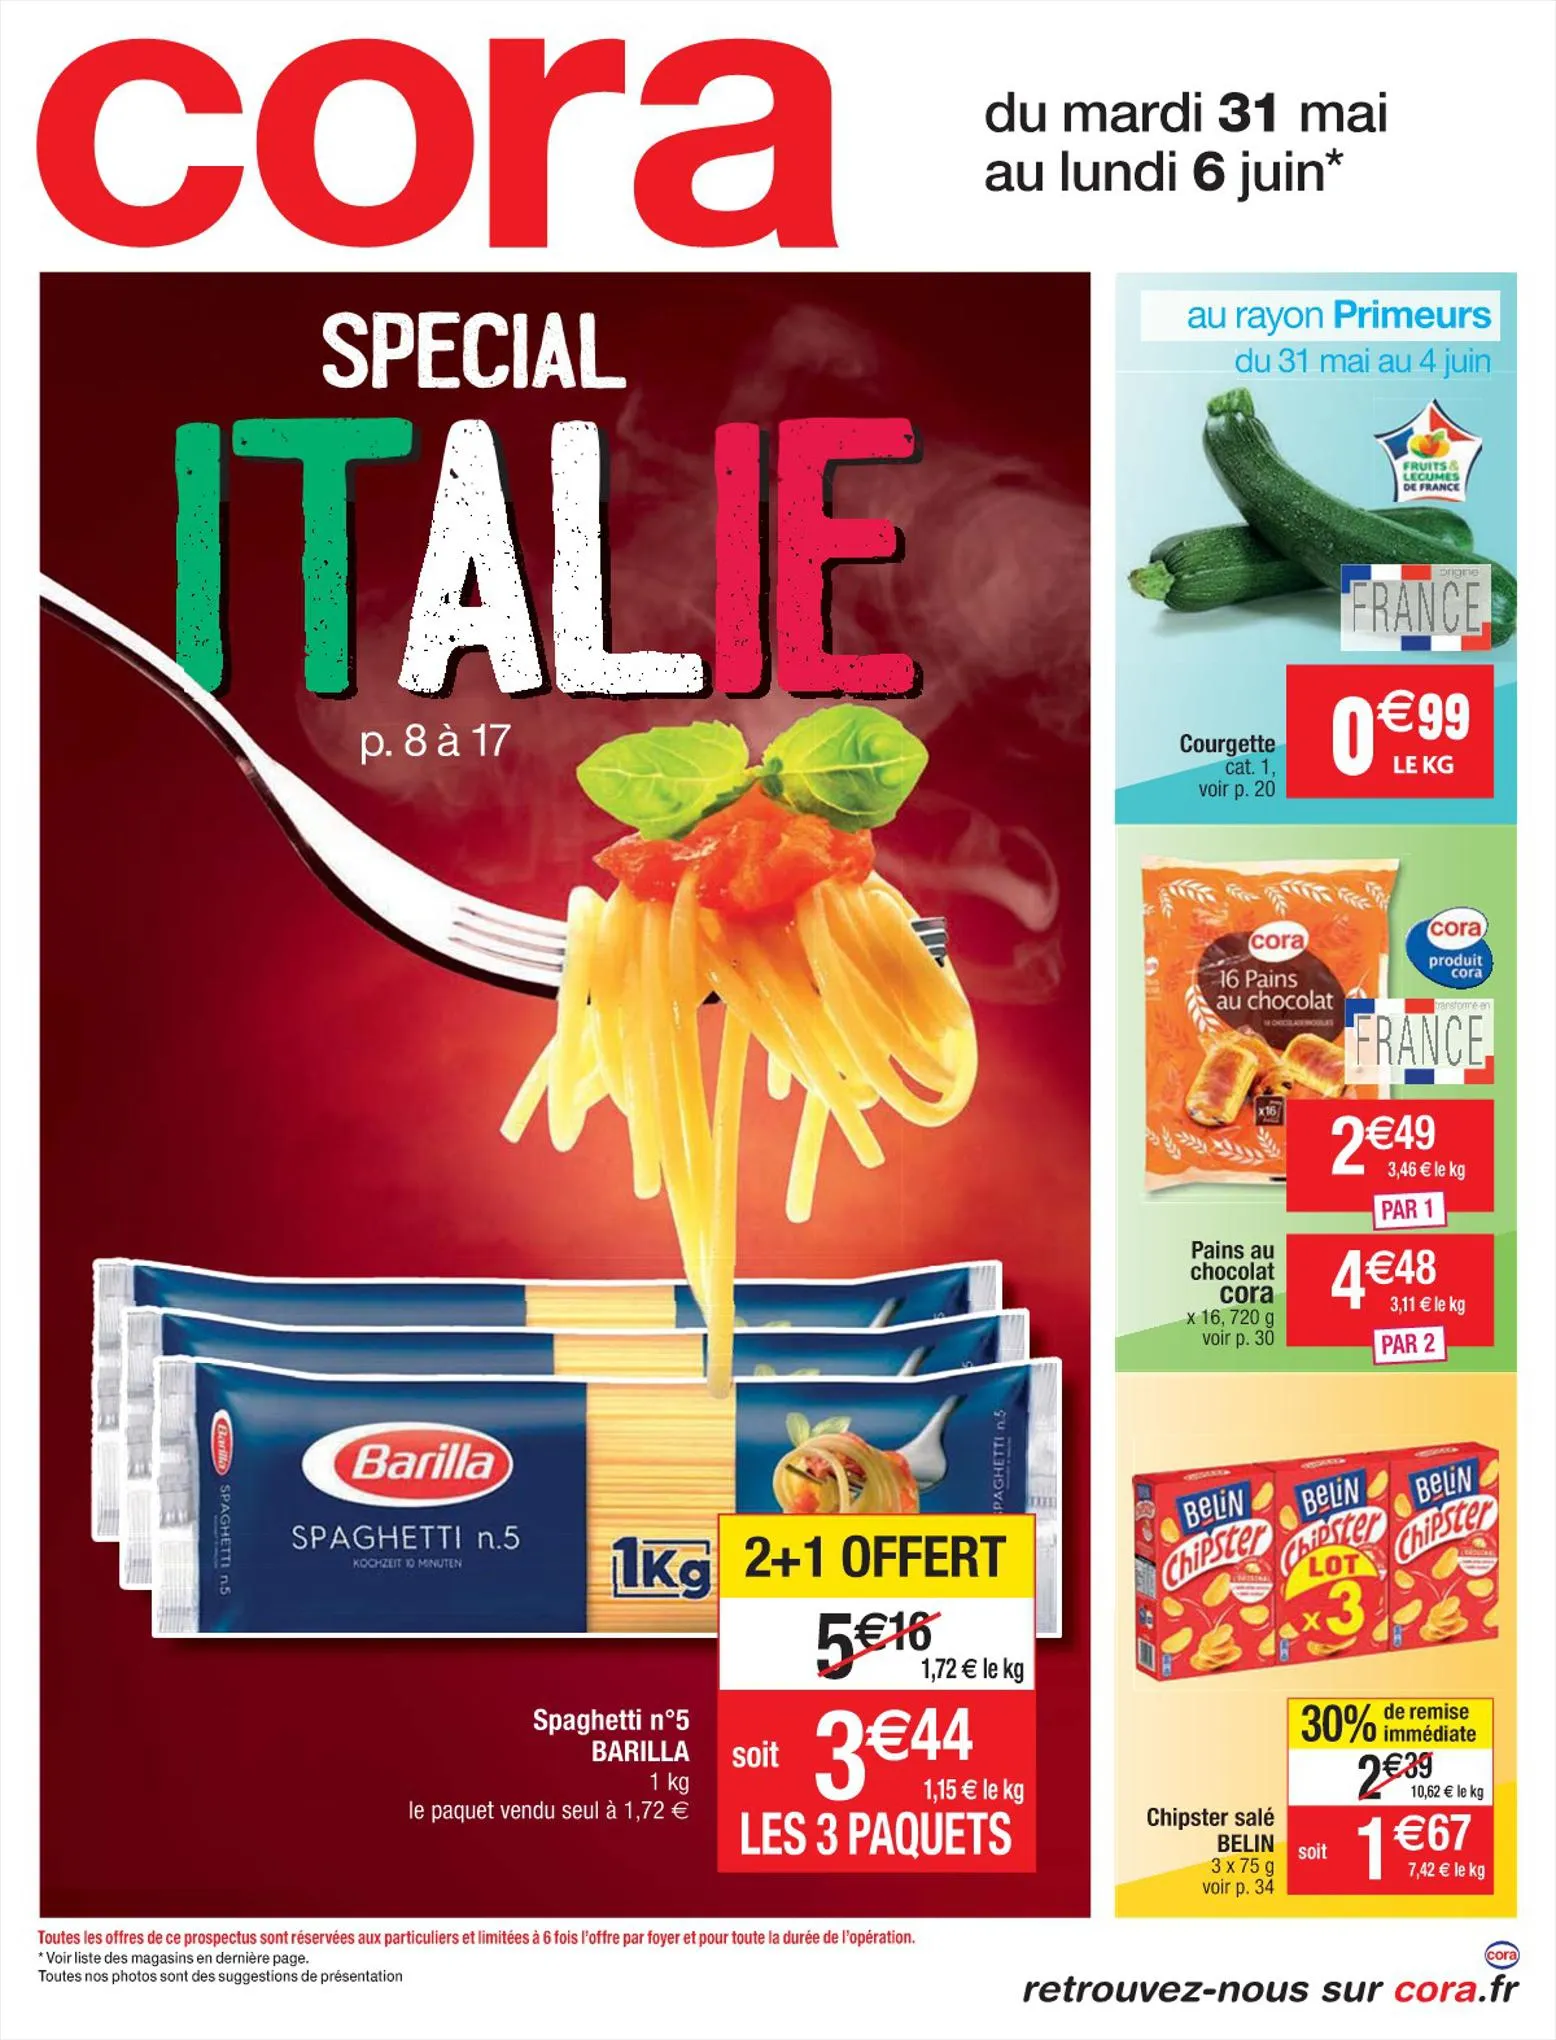 Catalogue Spécial Italie, page 00001